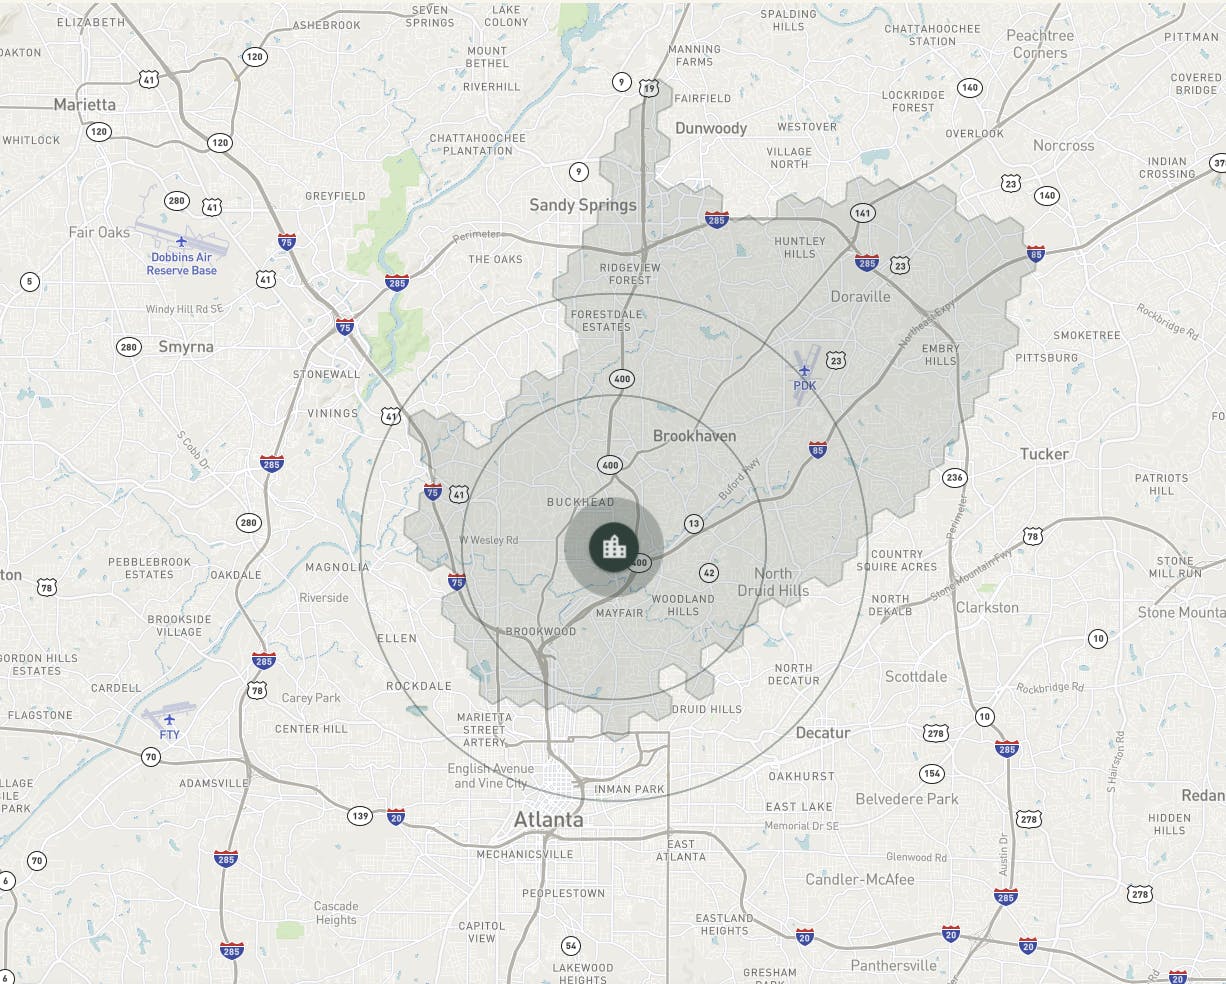 Map of Atlanta around Buckhead